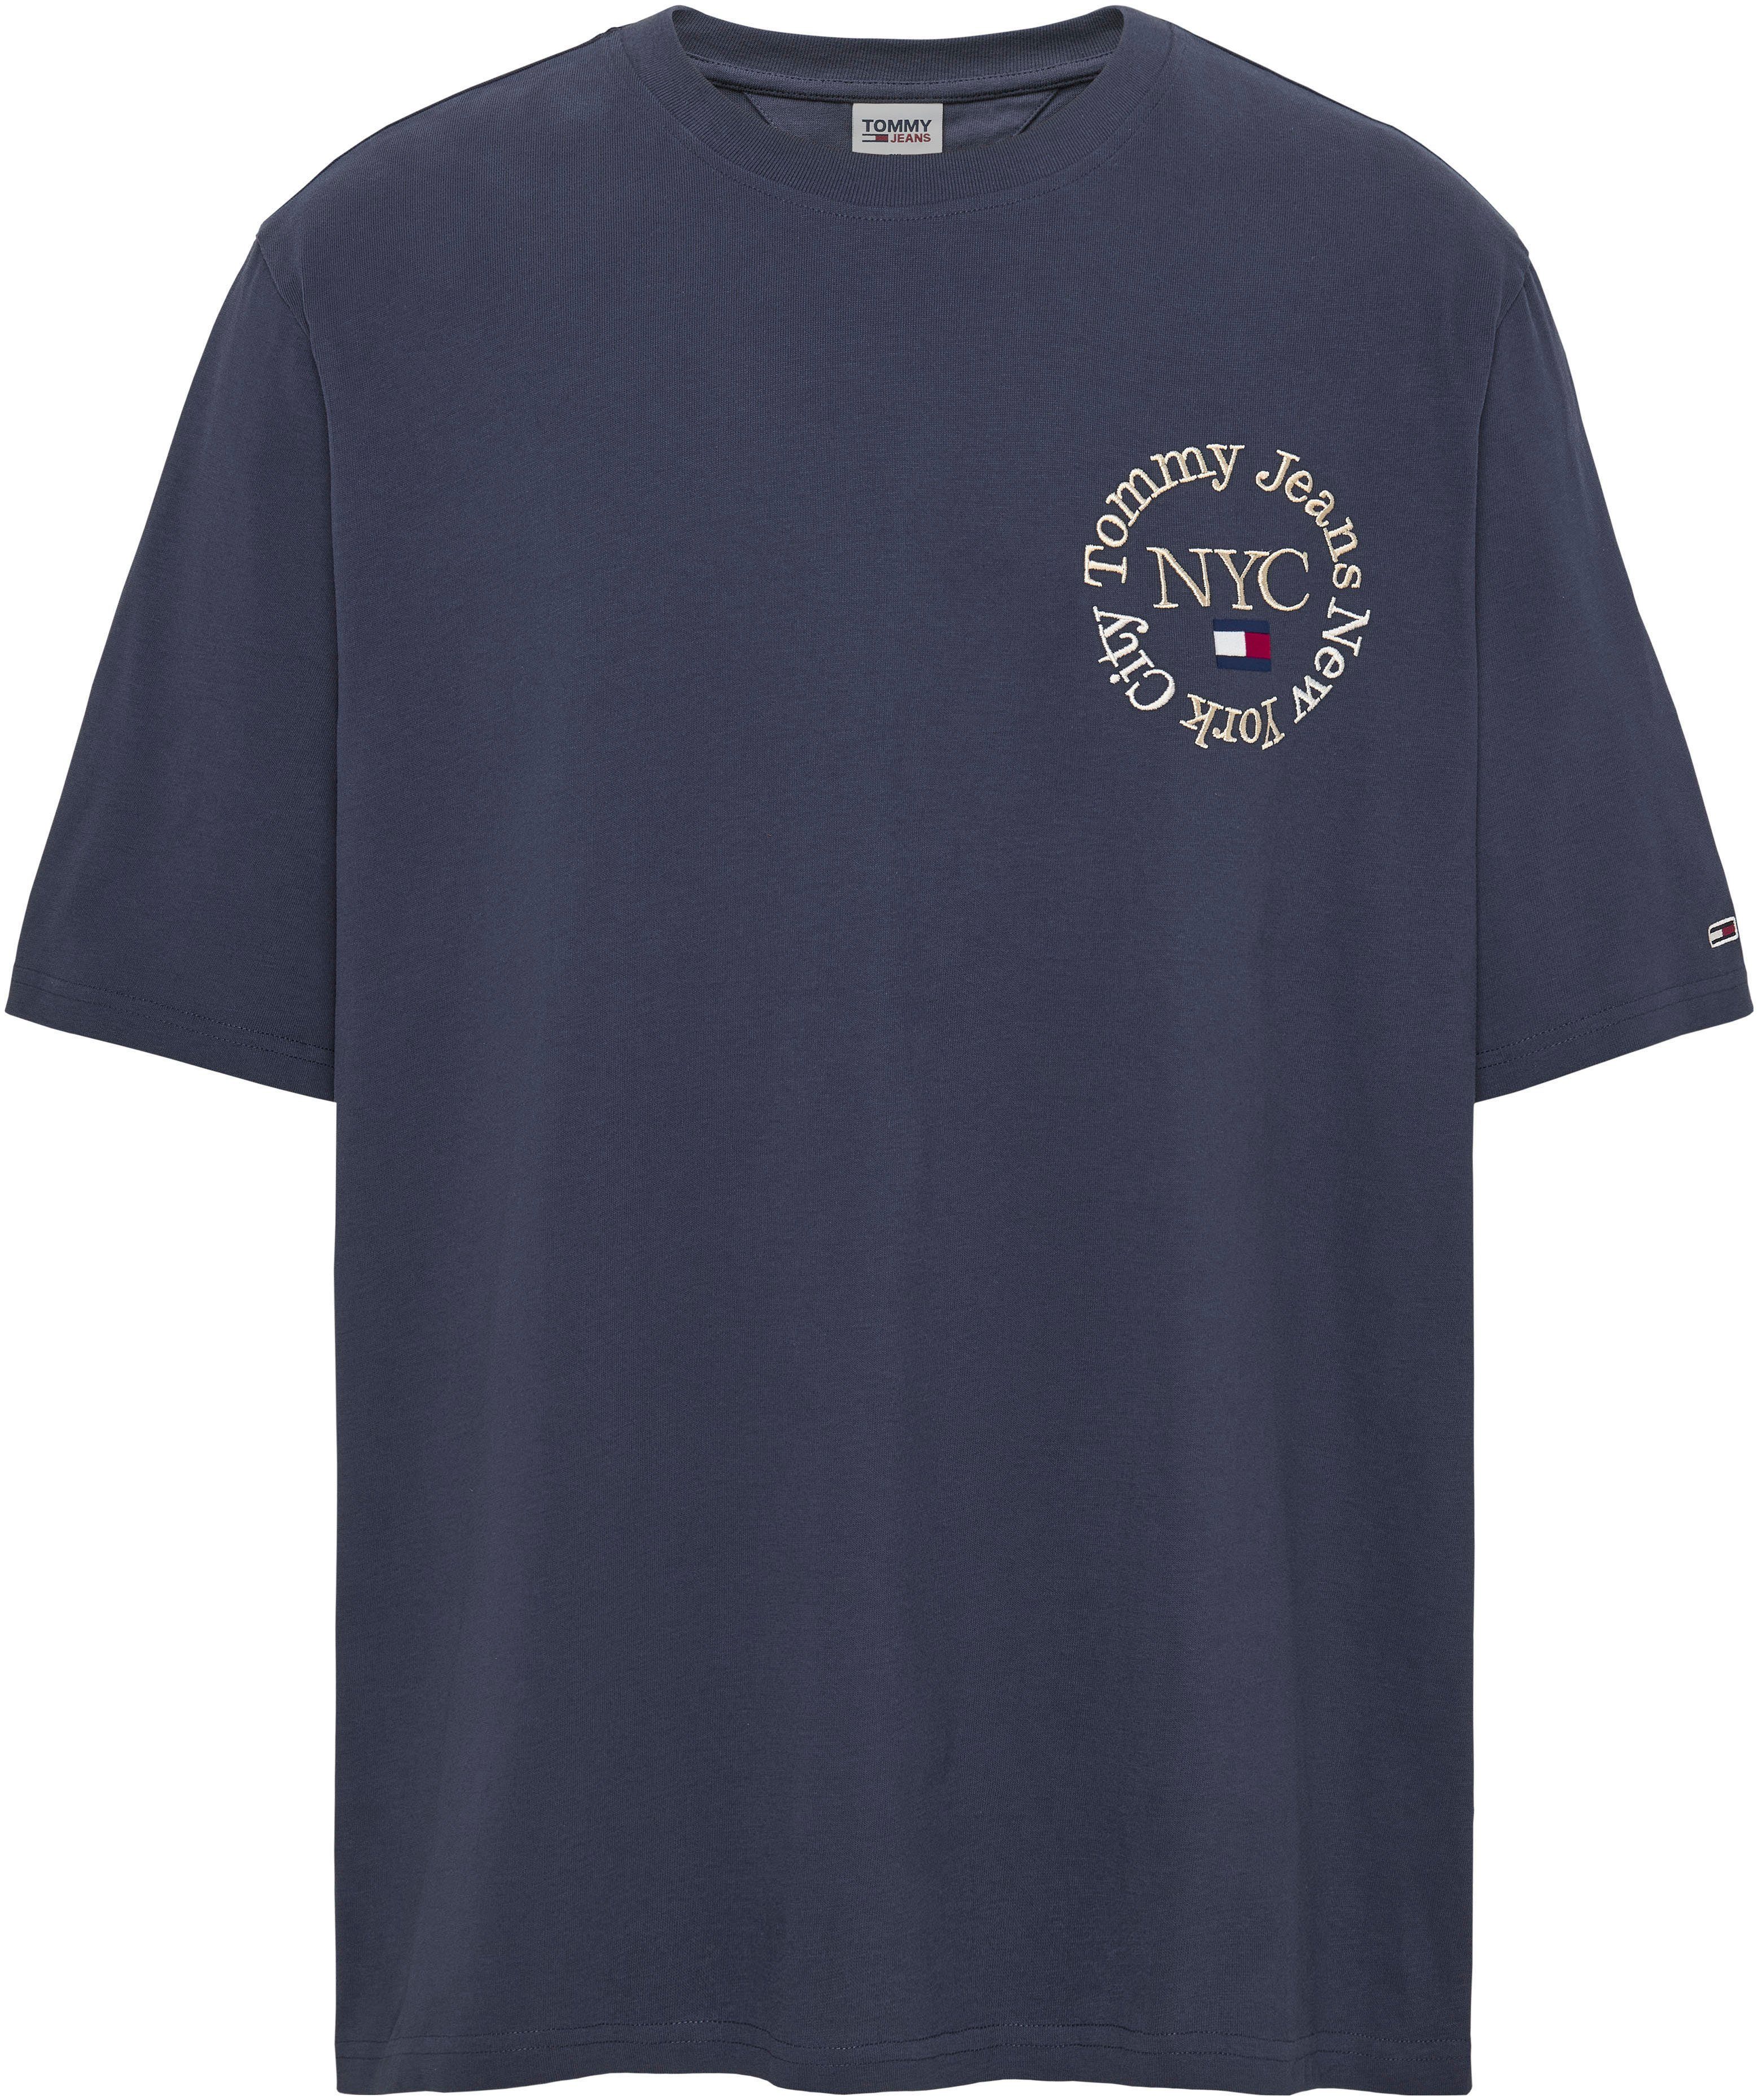 Navy TJM Tommy CIRCLE TIMELESS Plus PLUS TEE T-Shirt Twilight Jeans